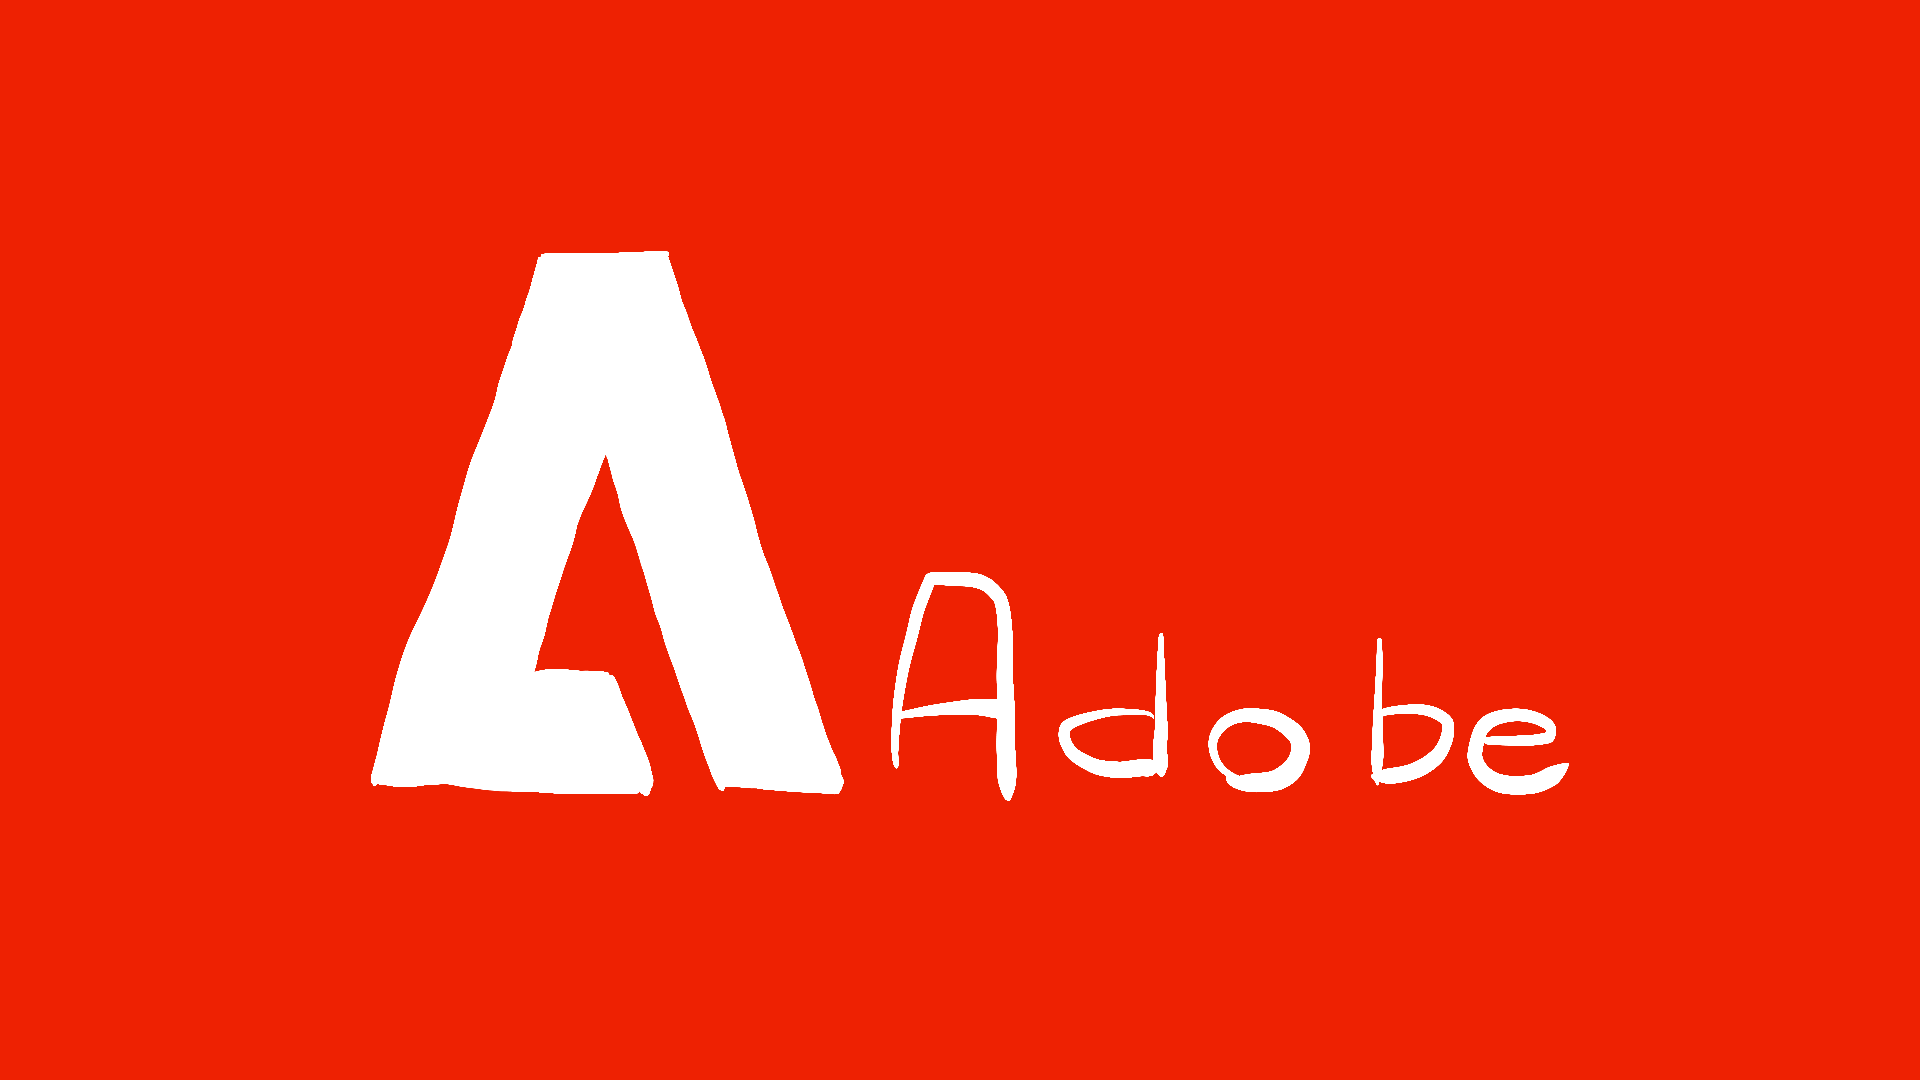 adobe